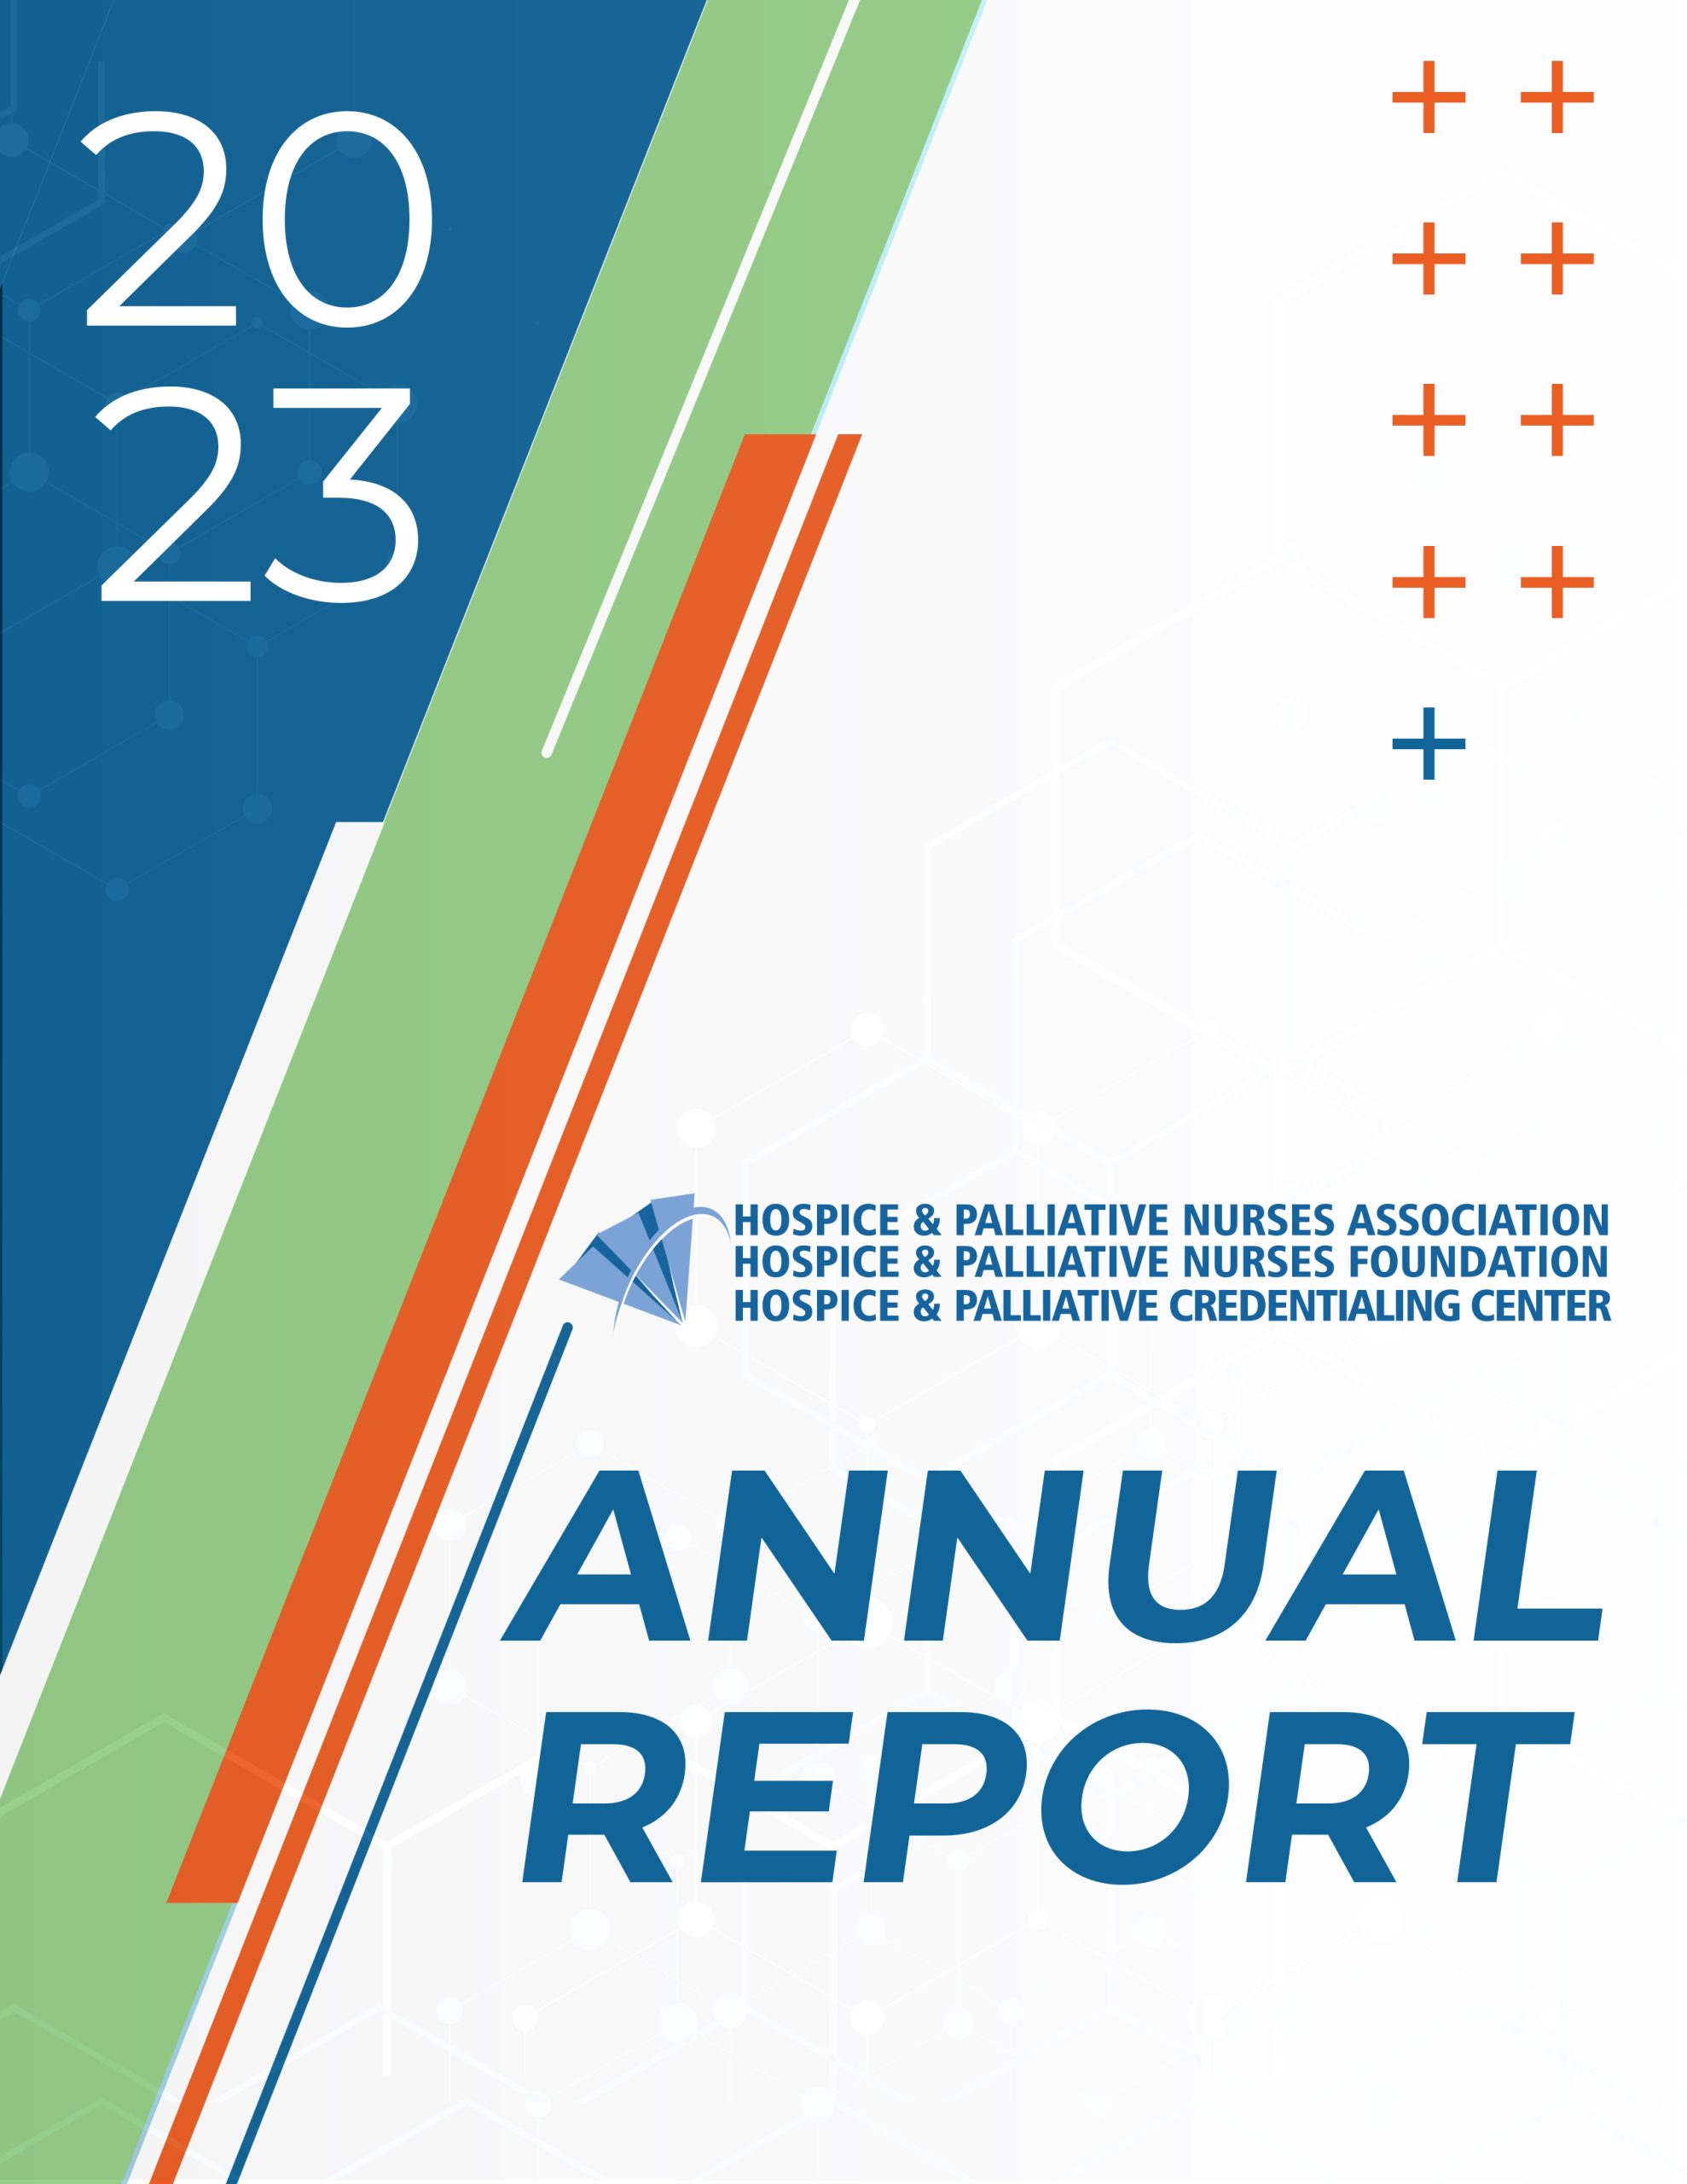 2023 HPNA/HPNF/HPCC Annual Report